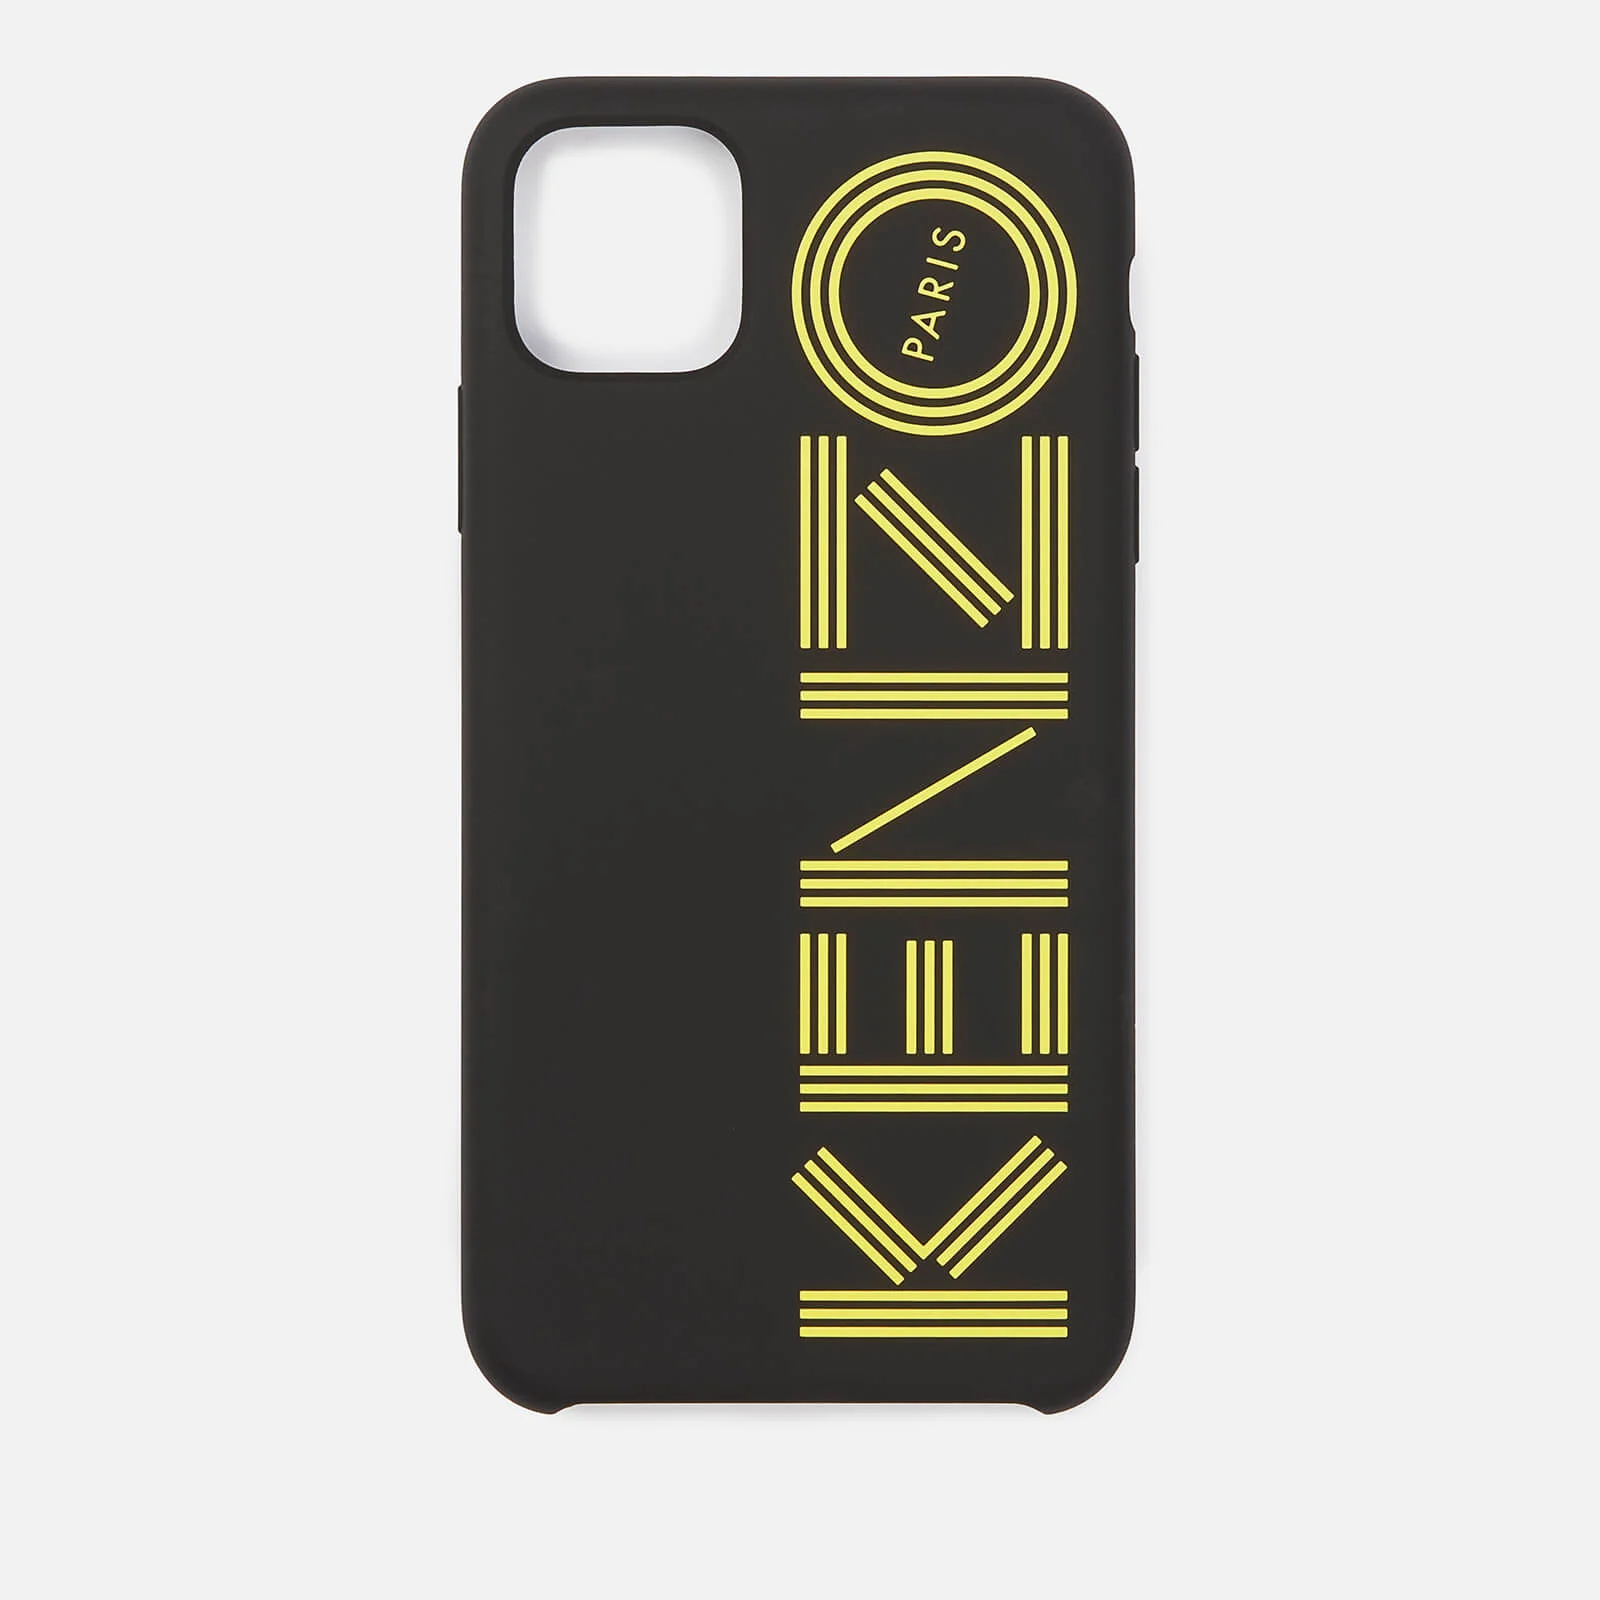 KENZO Men's Logo iPhone 11 Max Case - Black/Yellow Image 1